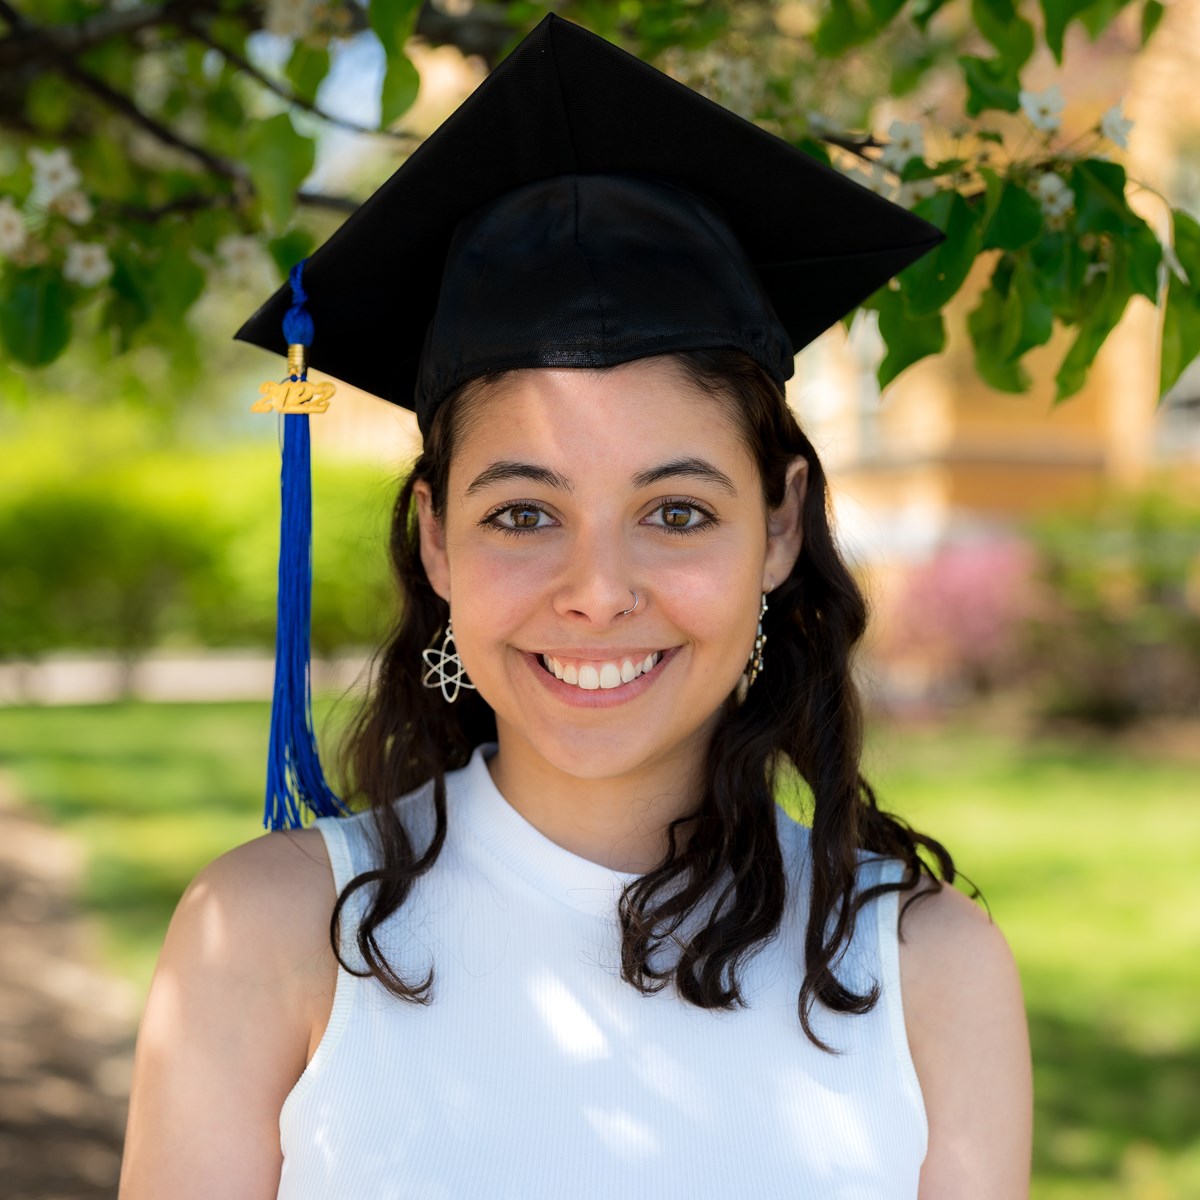 Cassia Fontes, Alumni of RadSci Program, headshot while wearing graduation cap